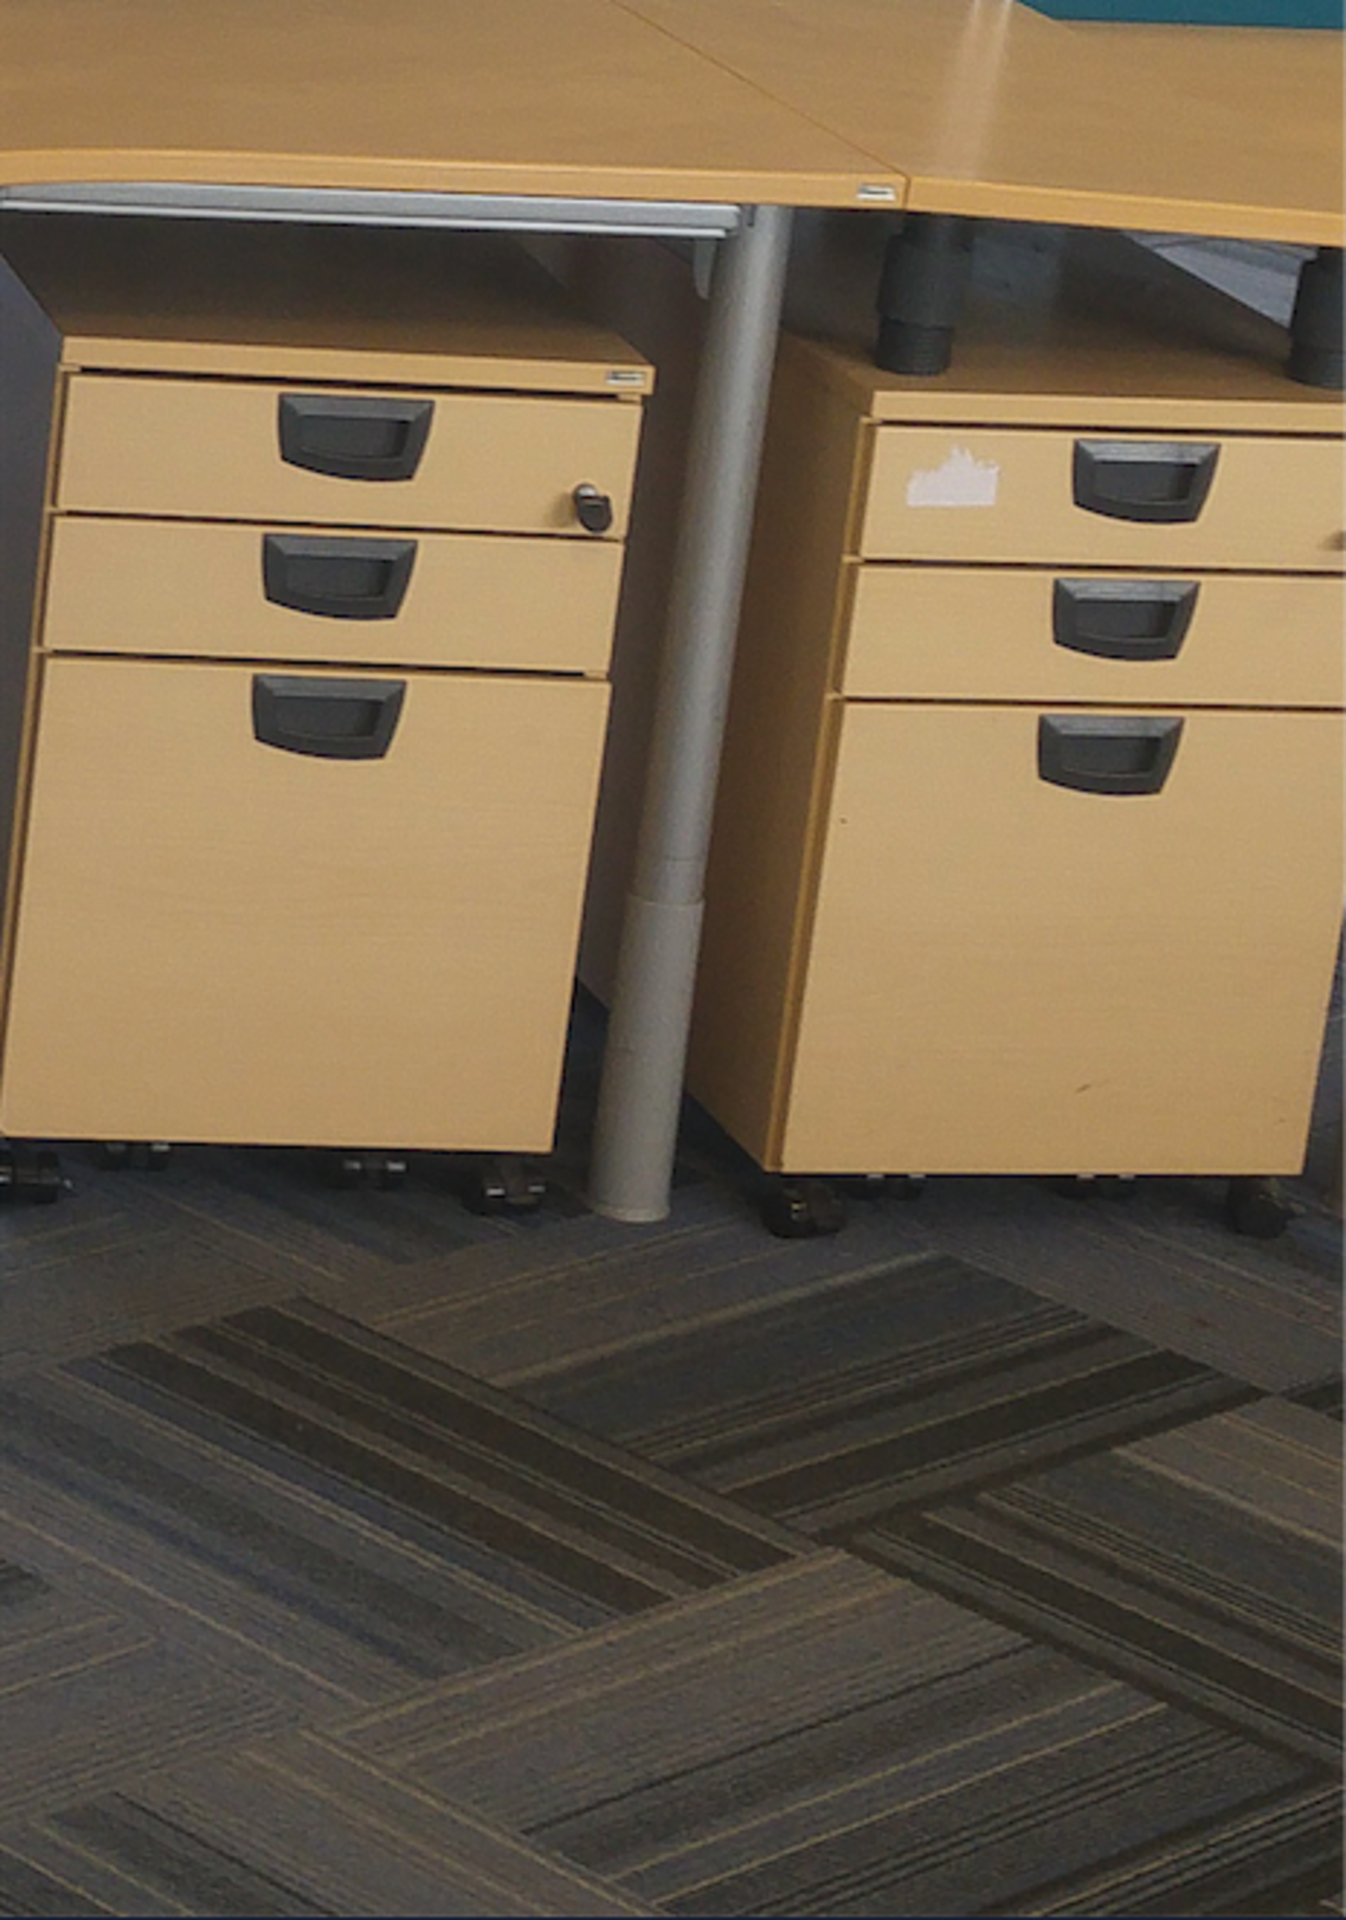 5 x 3 Drawer Under Desk Filing Cabinets on Wheels (with keys).